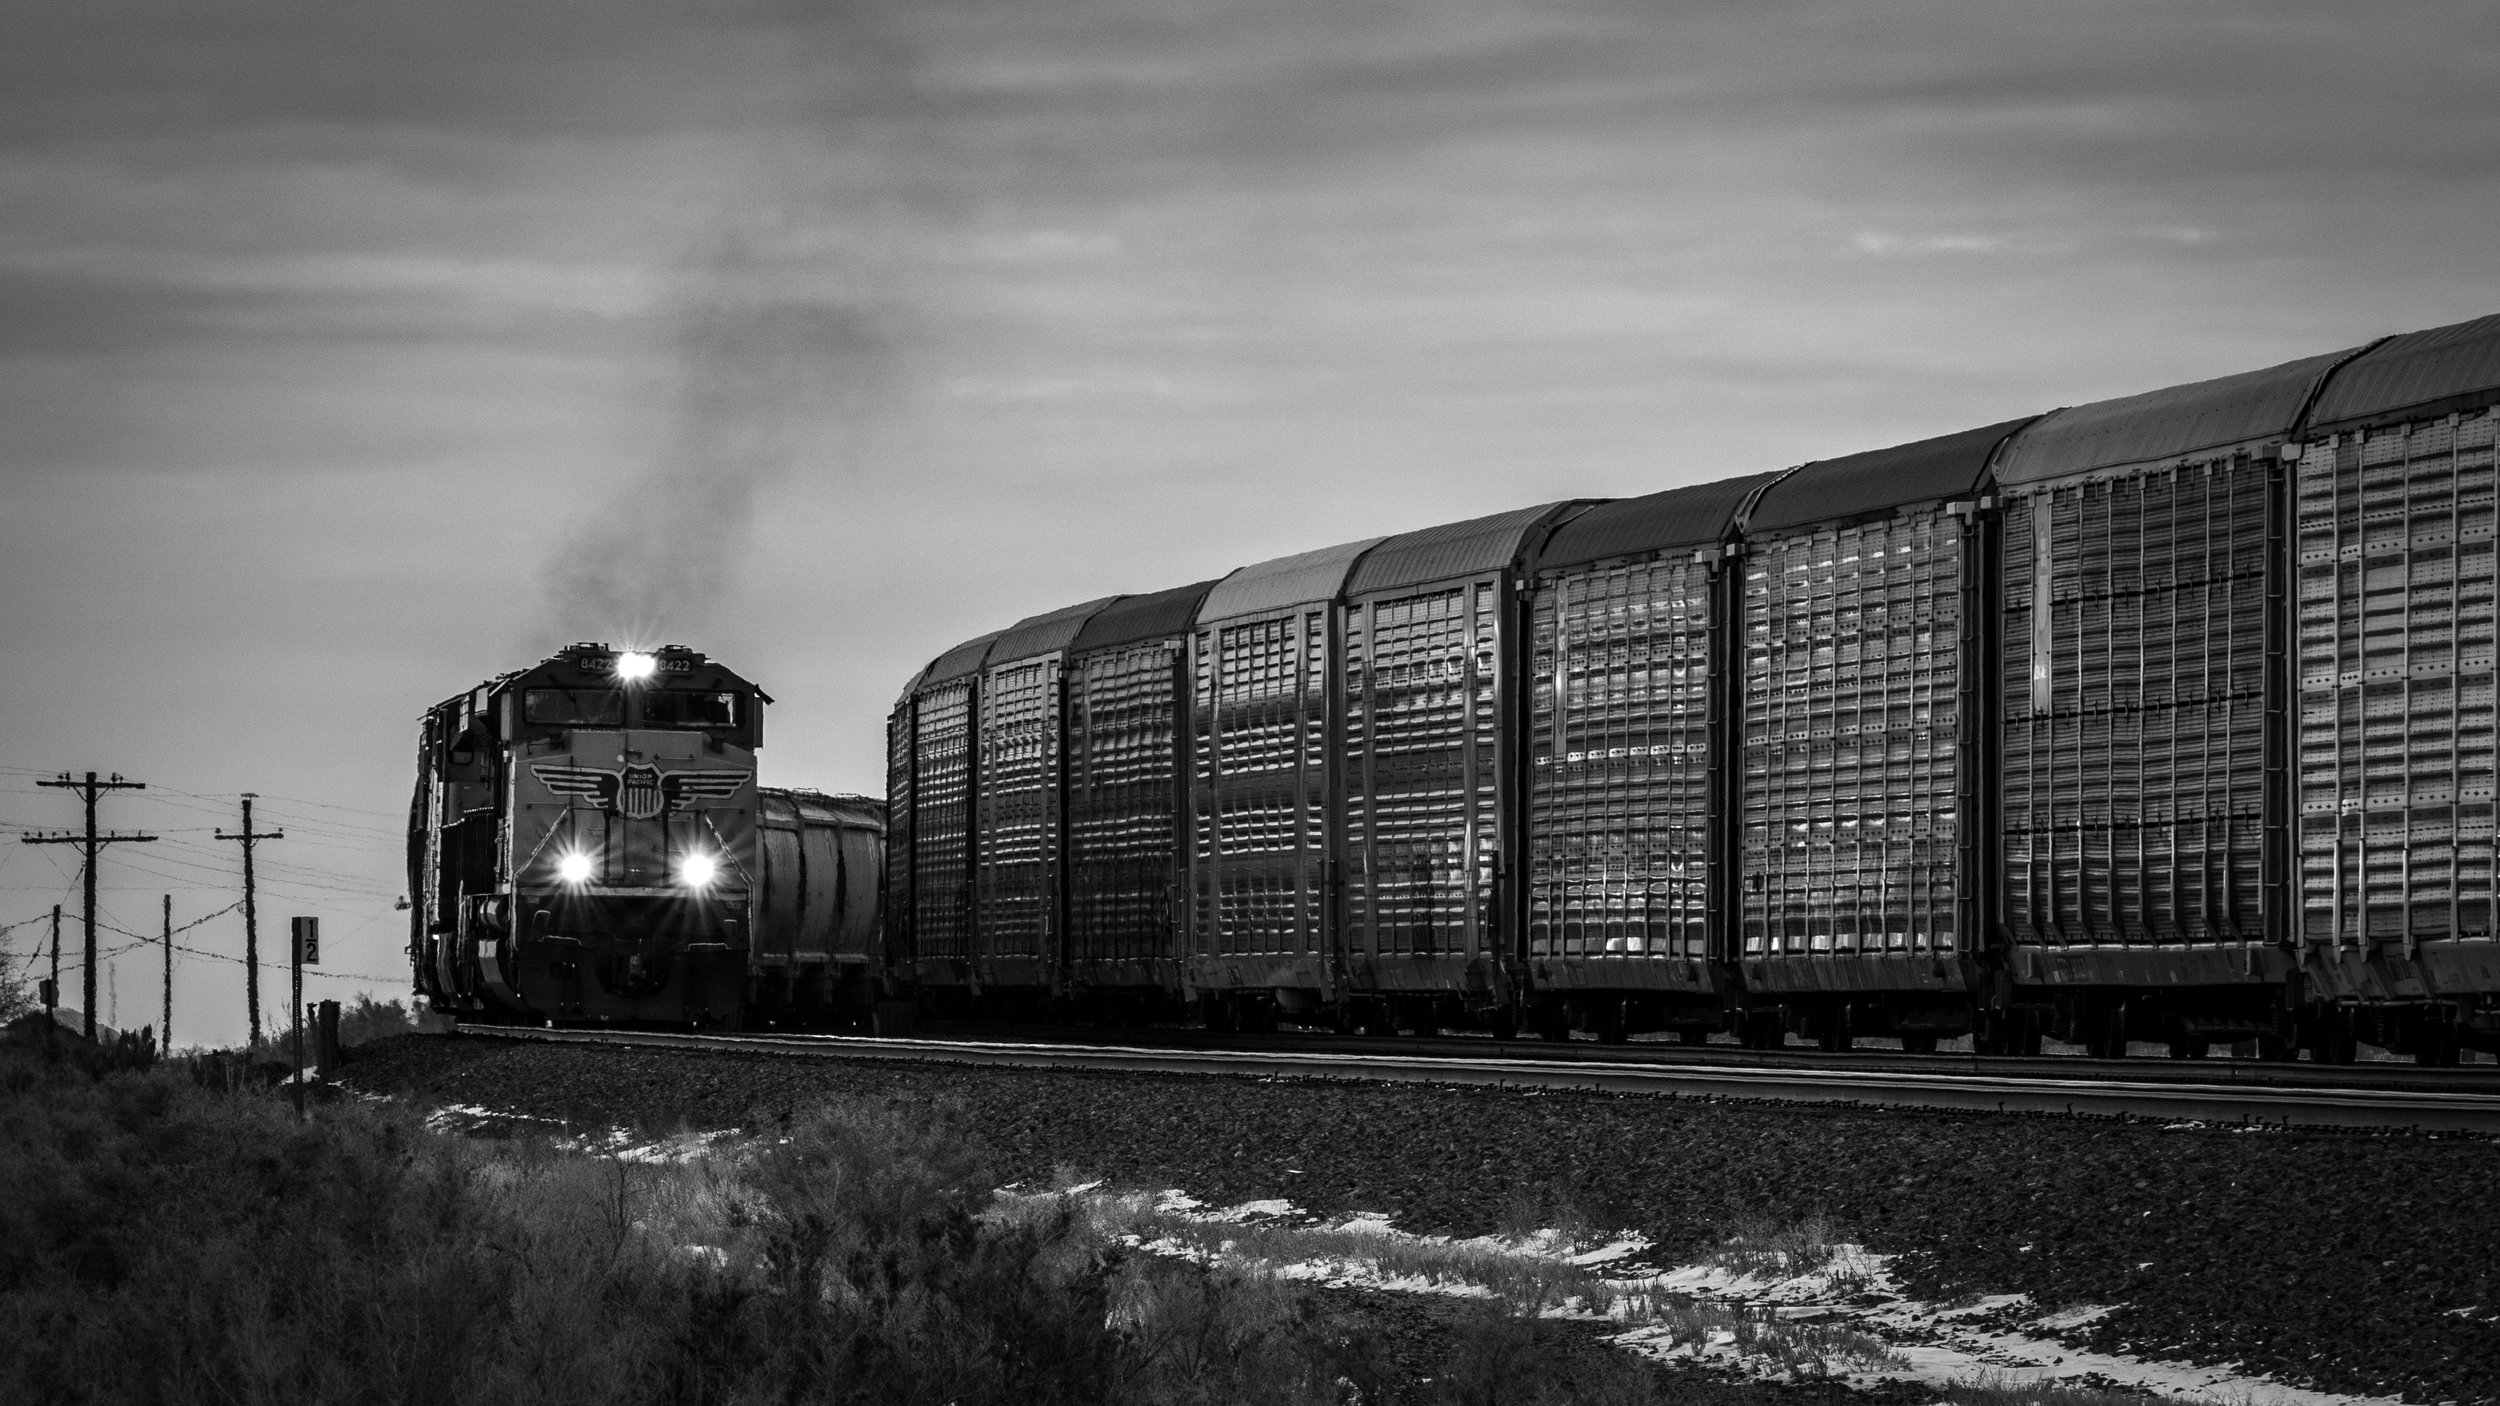 red-desert-wyoming-union-pacific-train-locomotive.jpg